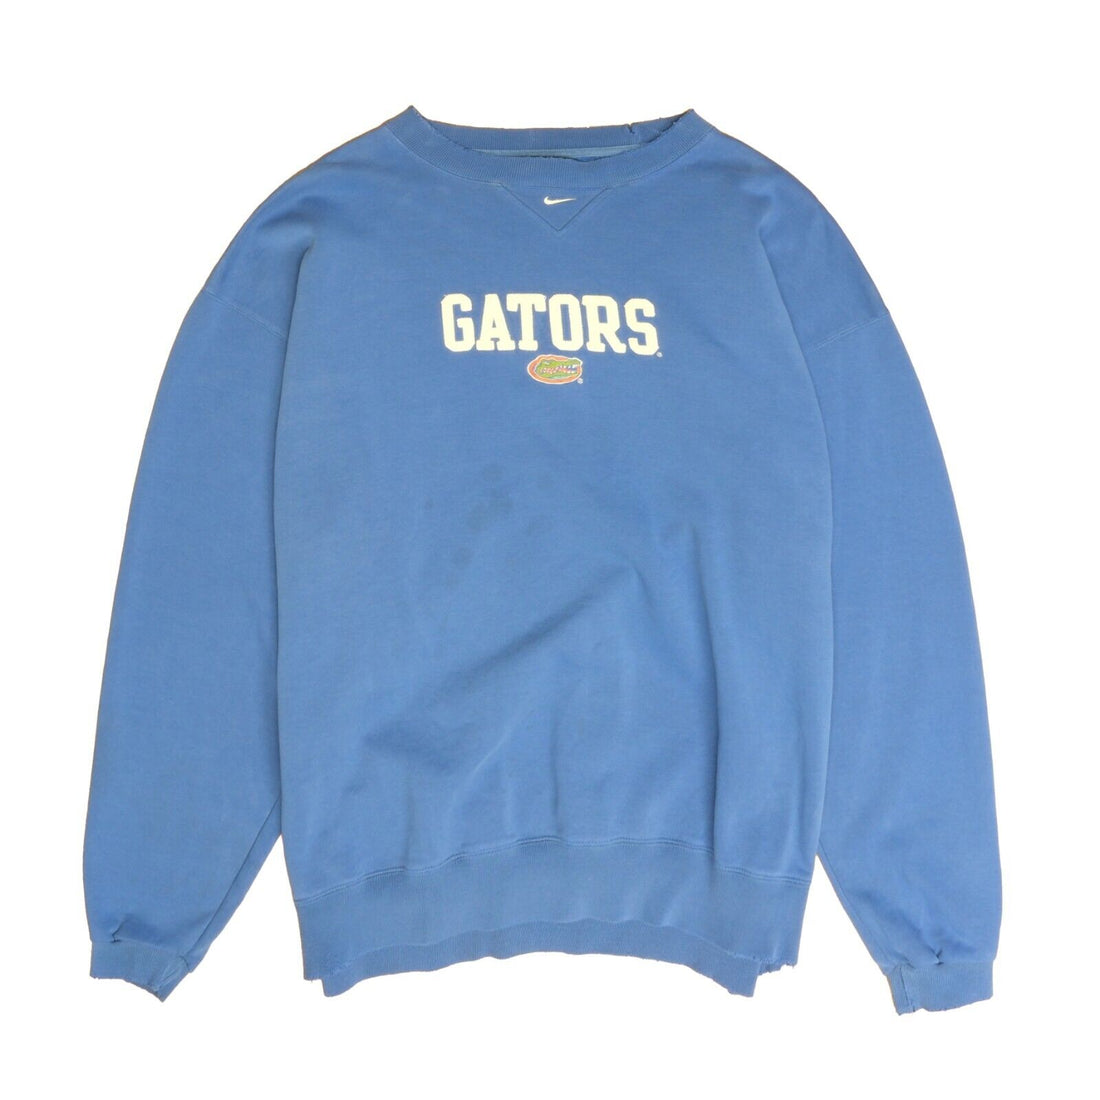 Vintage Florida Gators Nike Sweatshirt Crewneck Size XL Blue NCAA